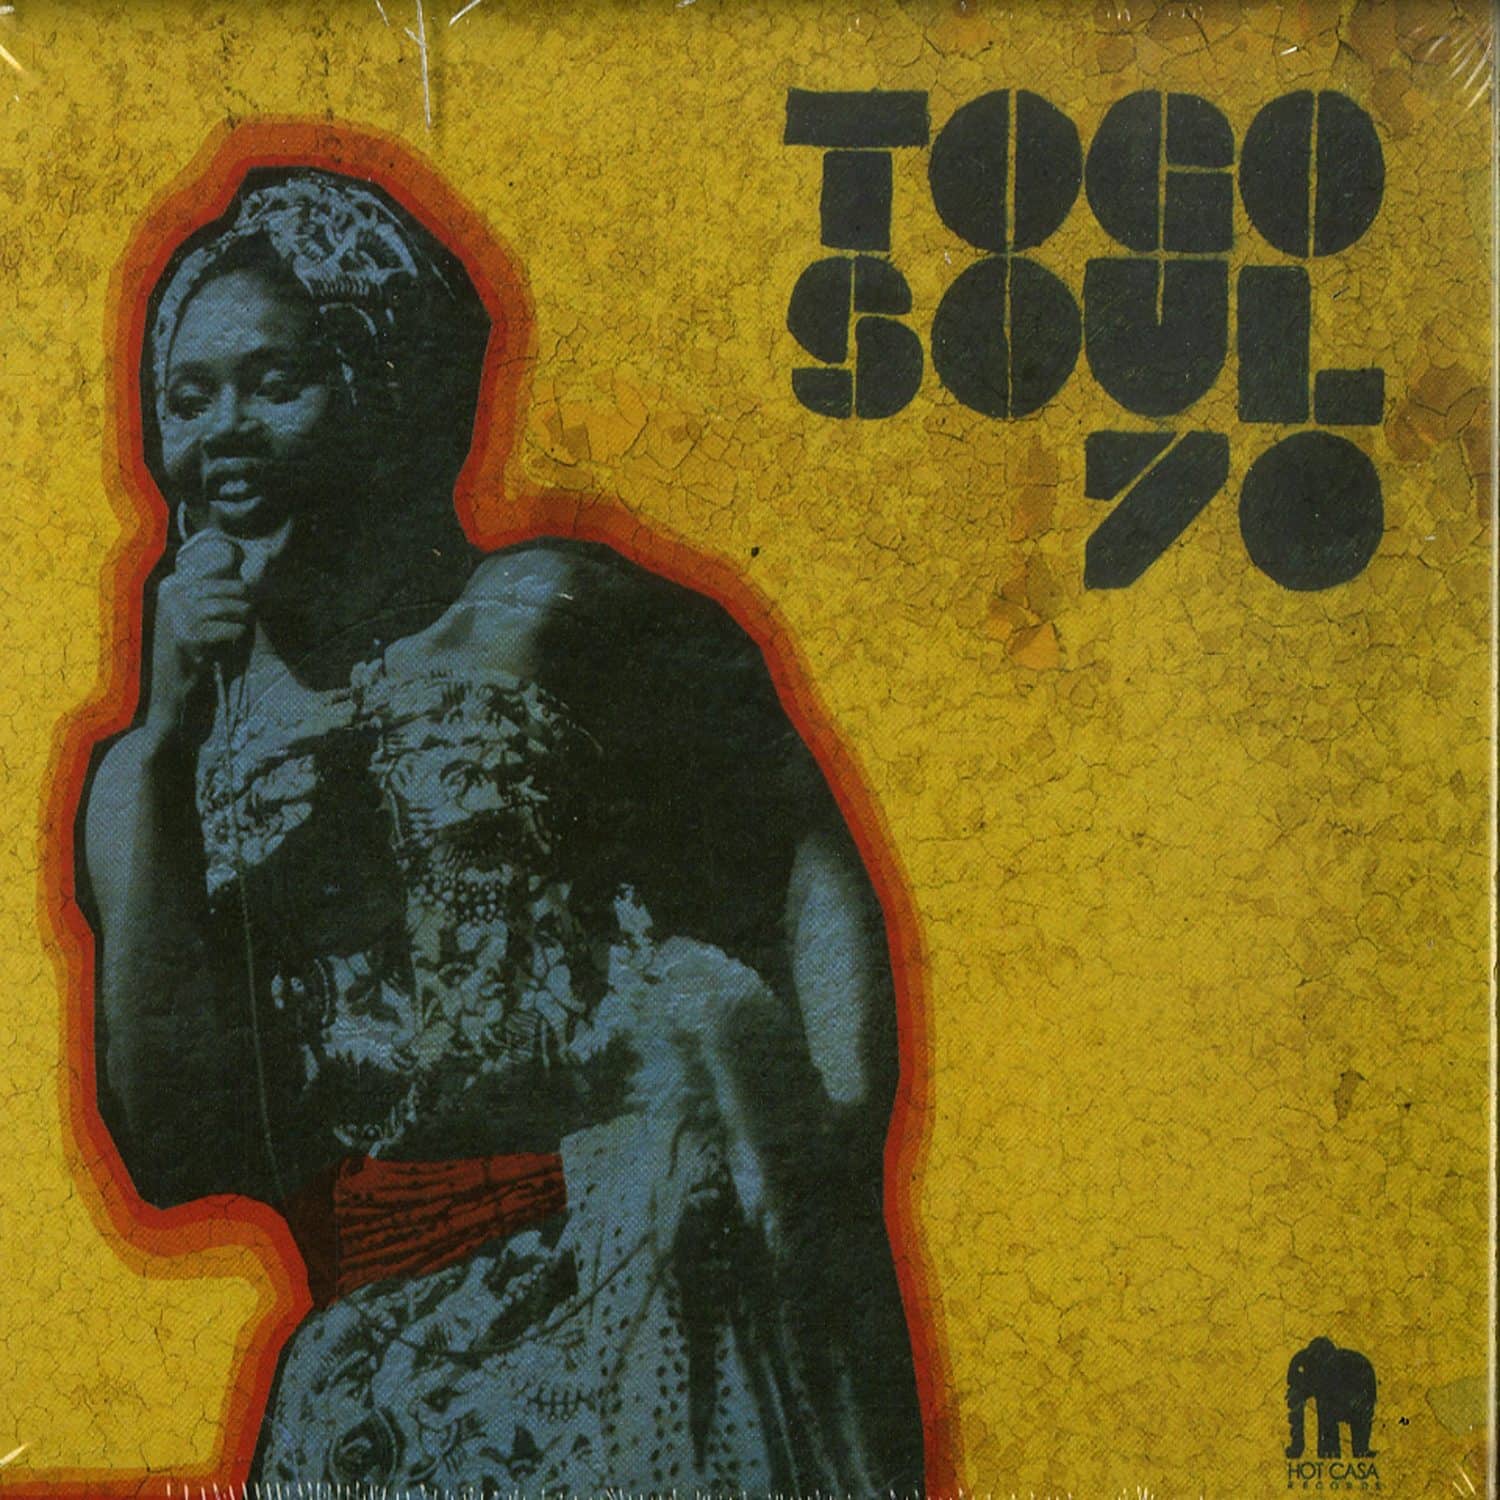 Various Artists - TOGO SOUL 70 